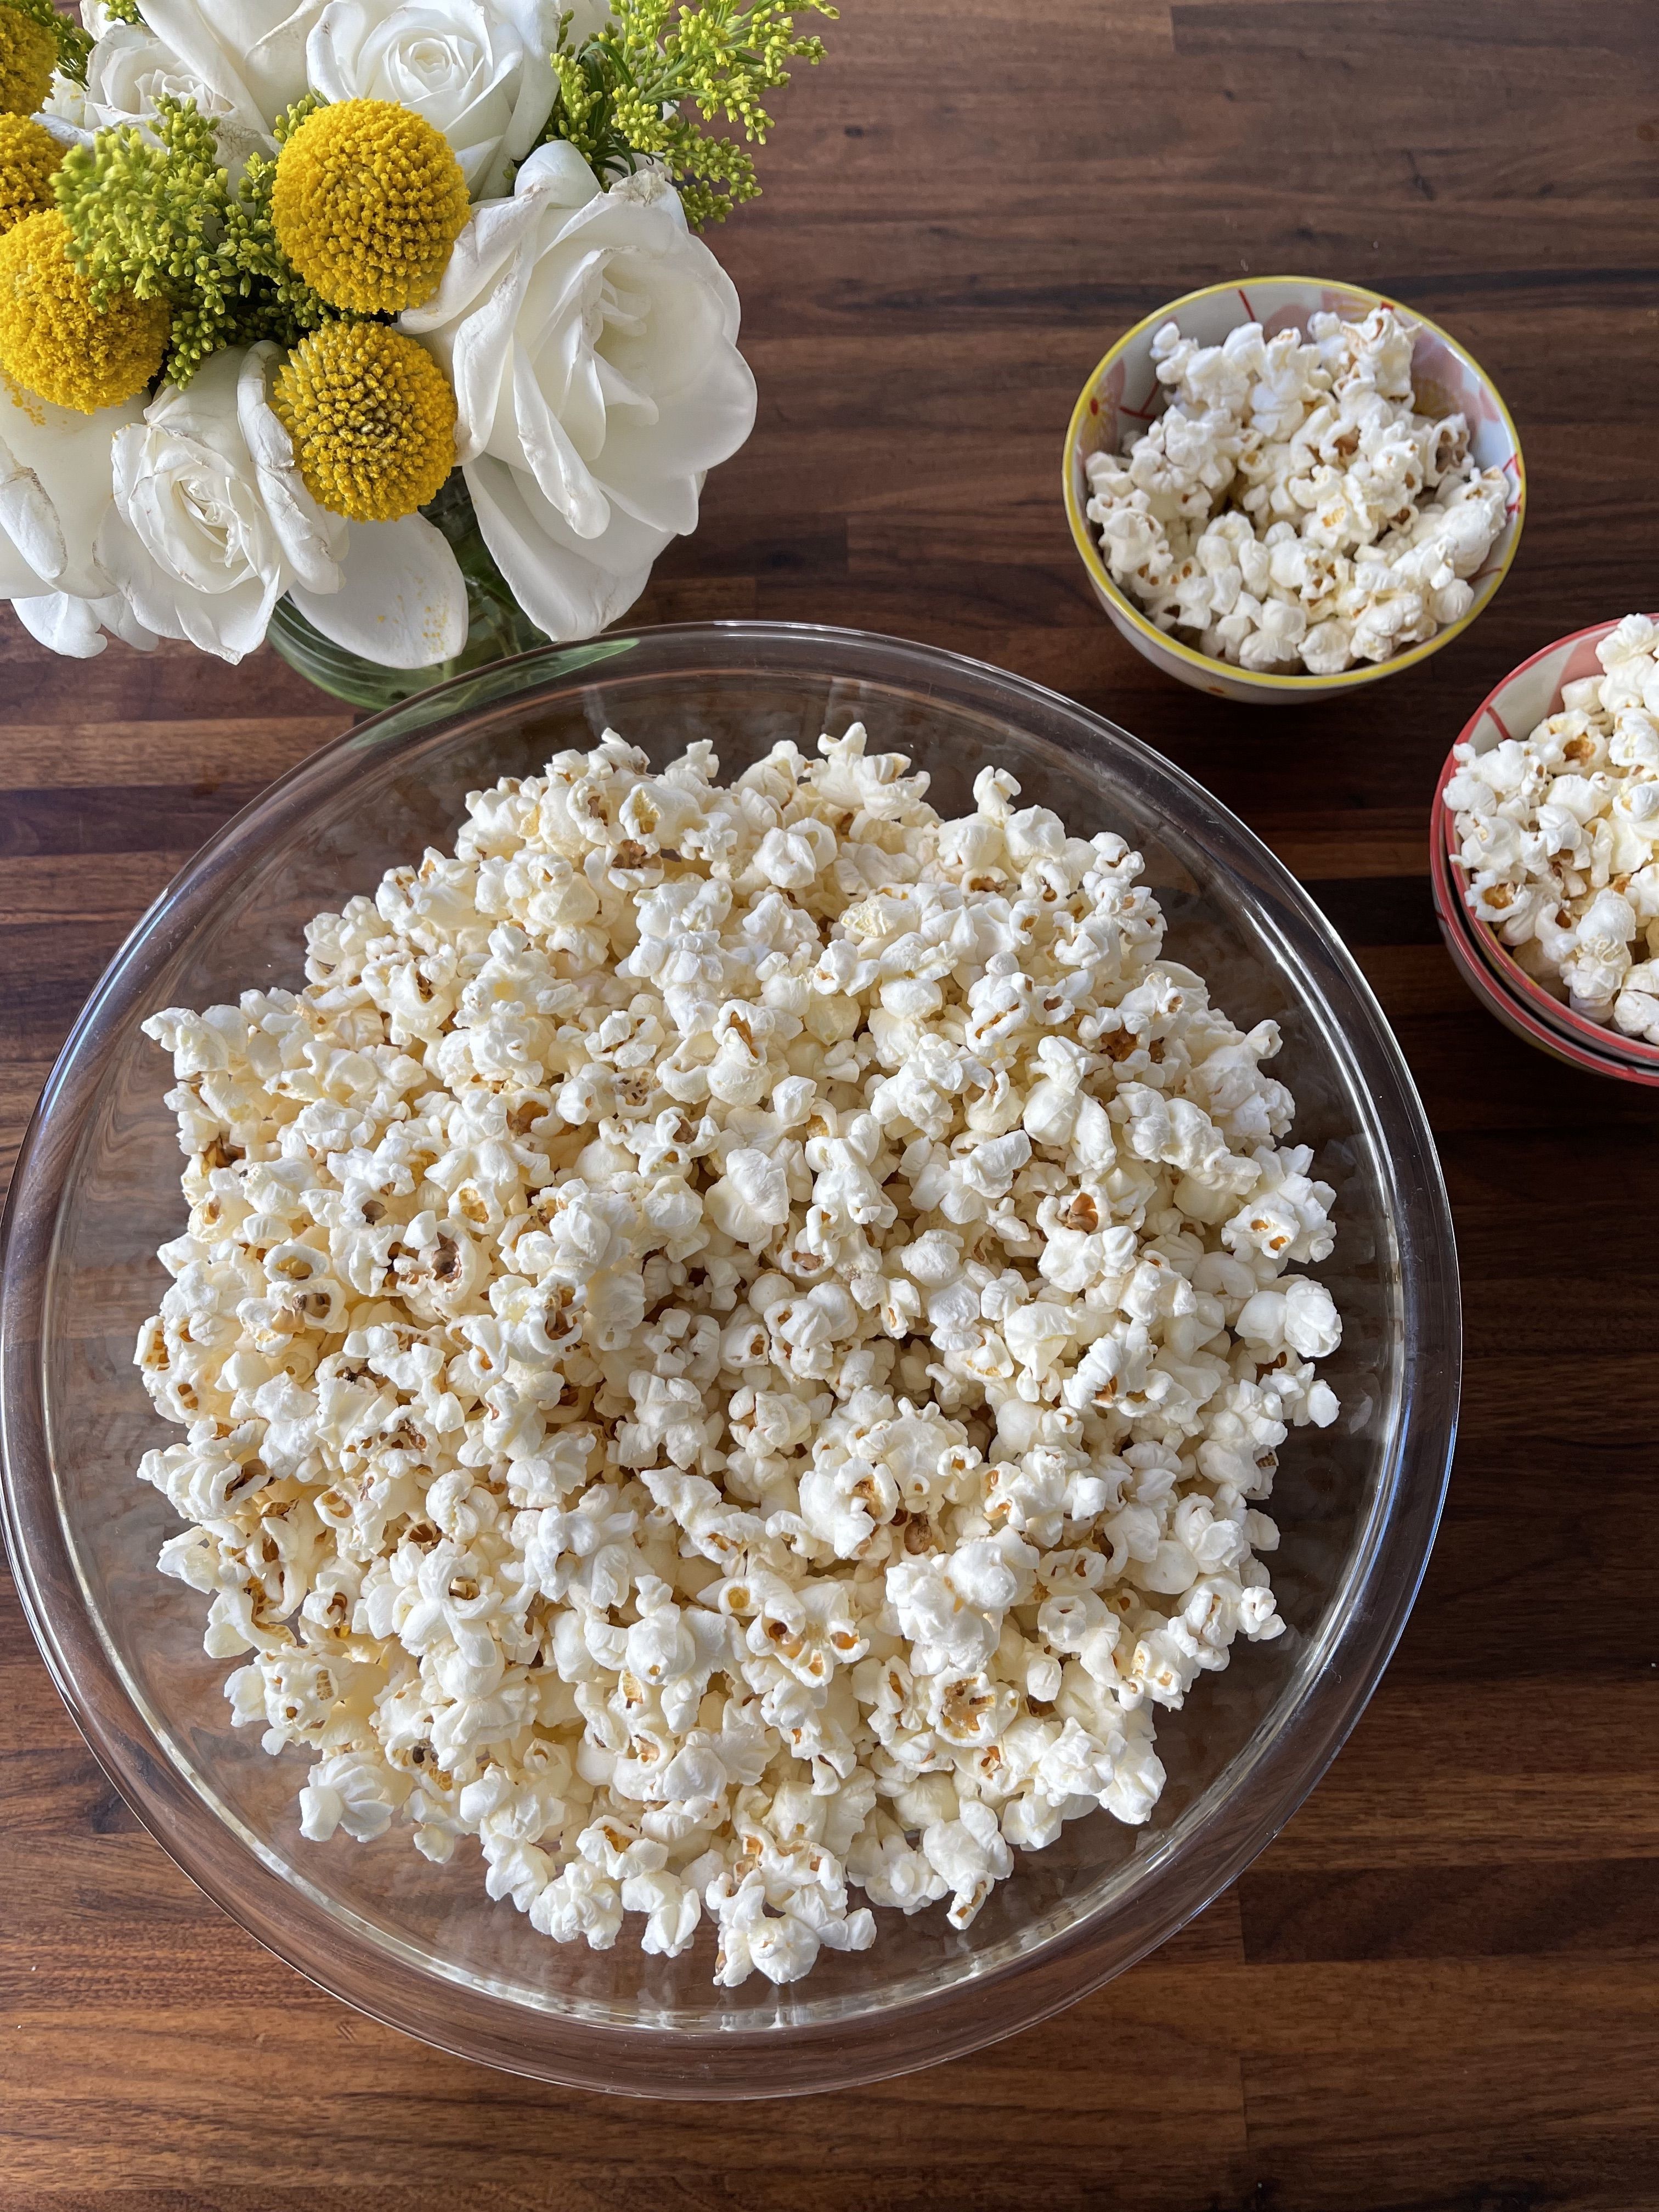 Easy Stovetop Popcorn: How To Pop Popcorn On Your Range!